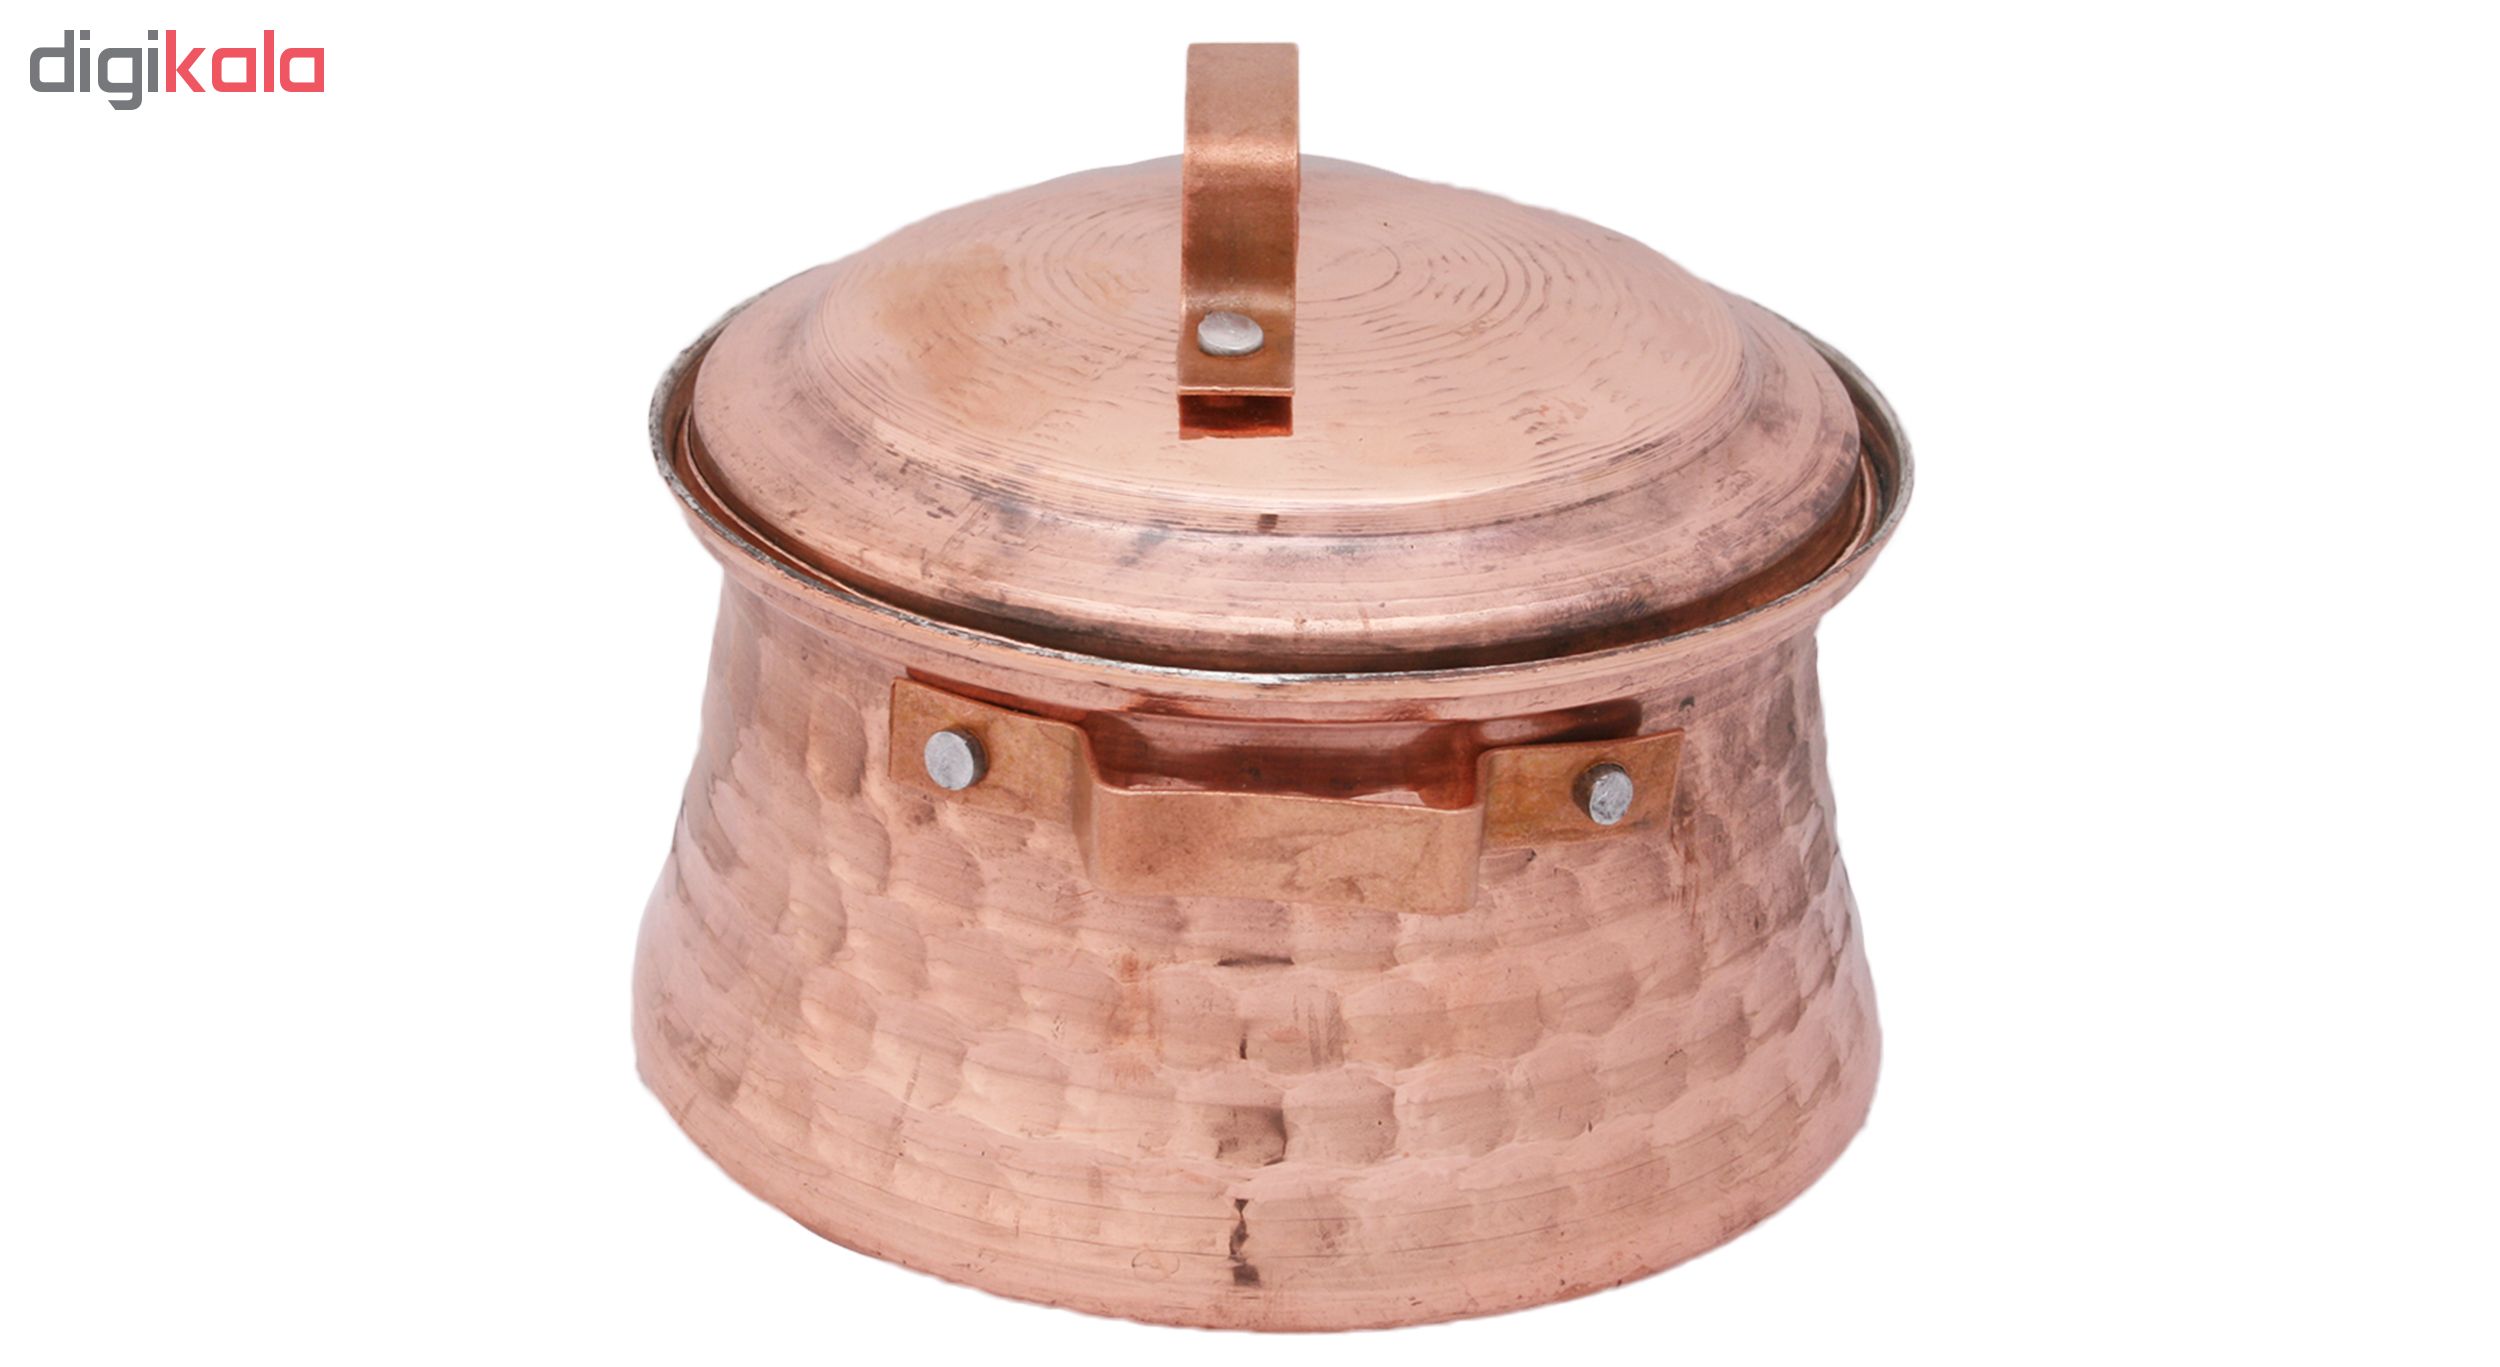 Copper pan, Model S324